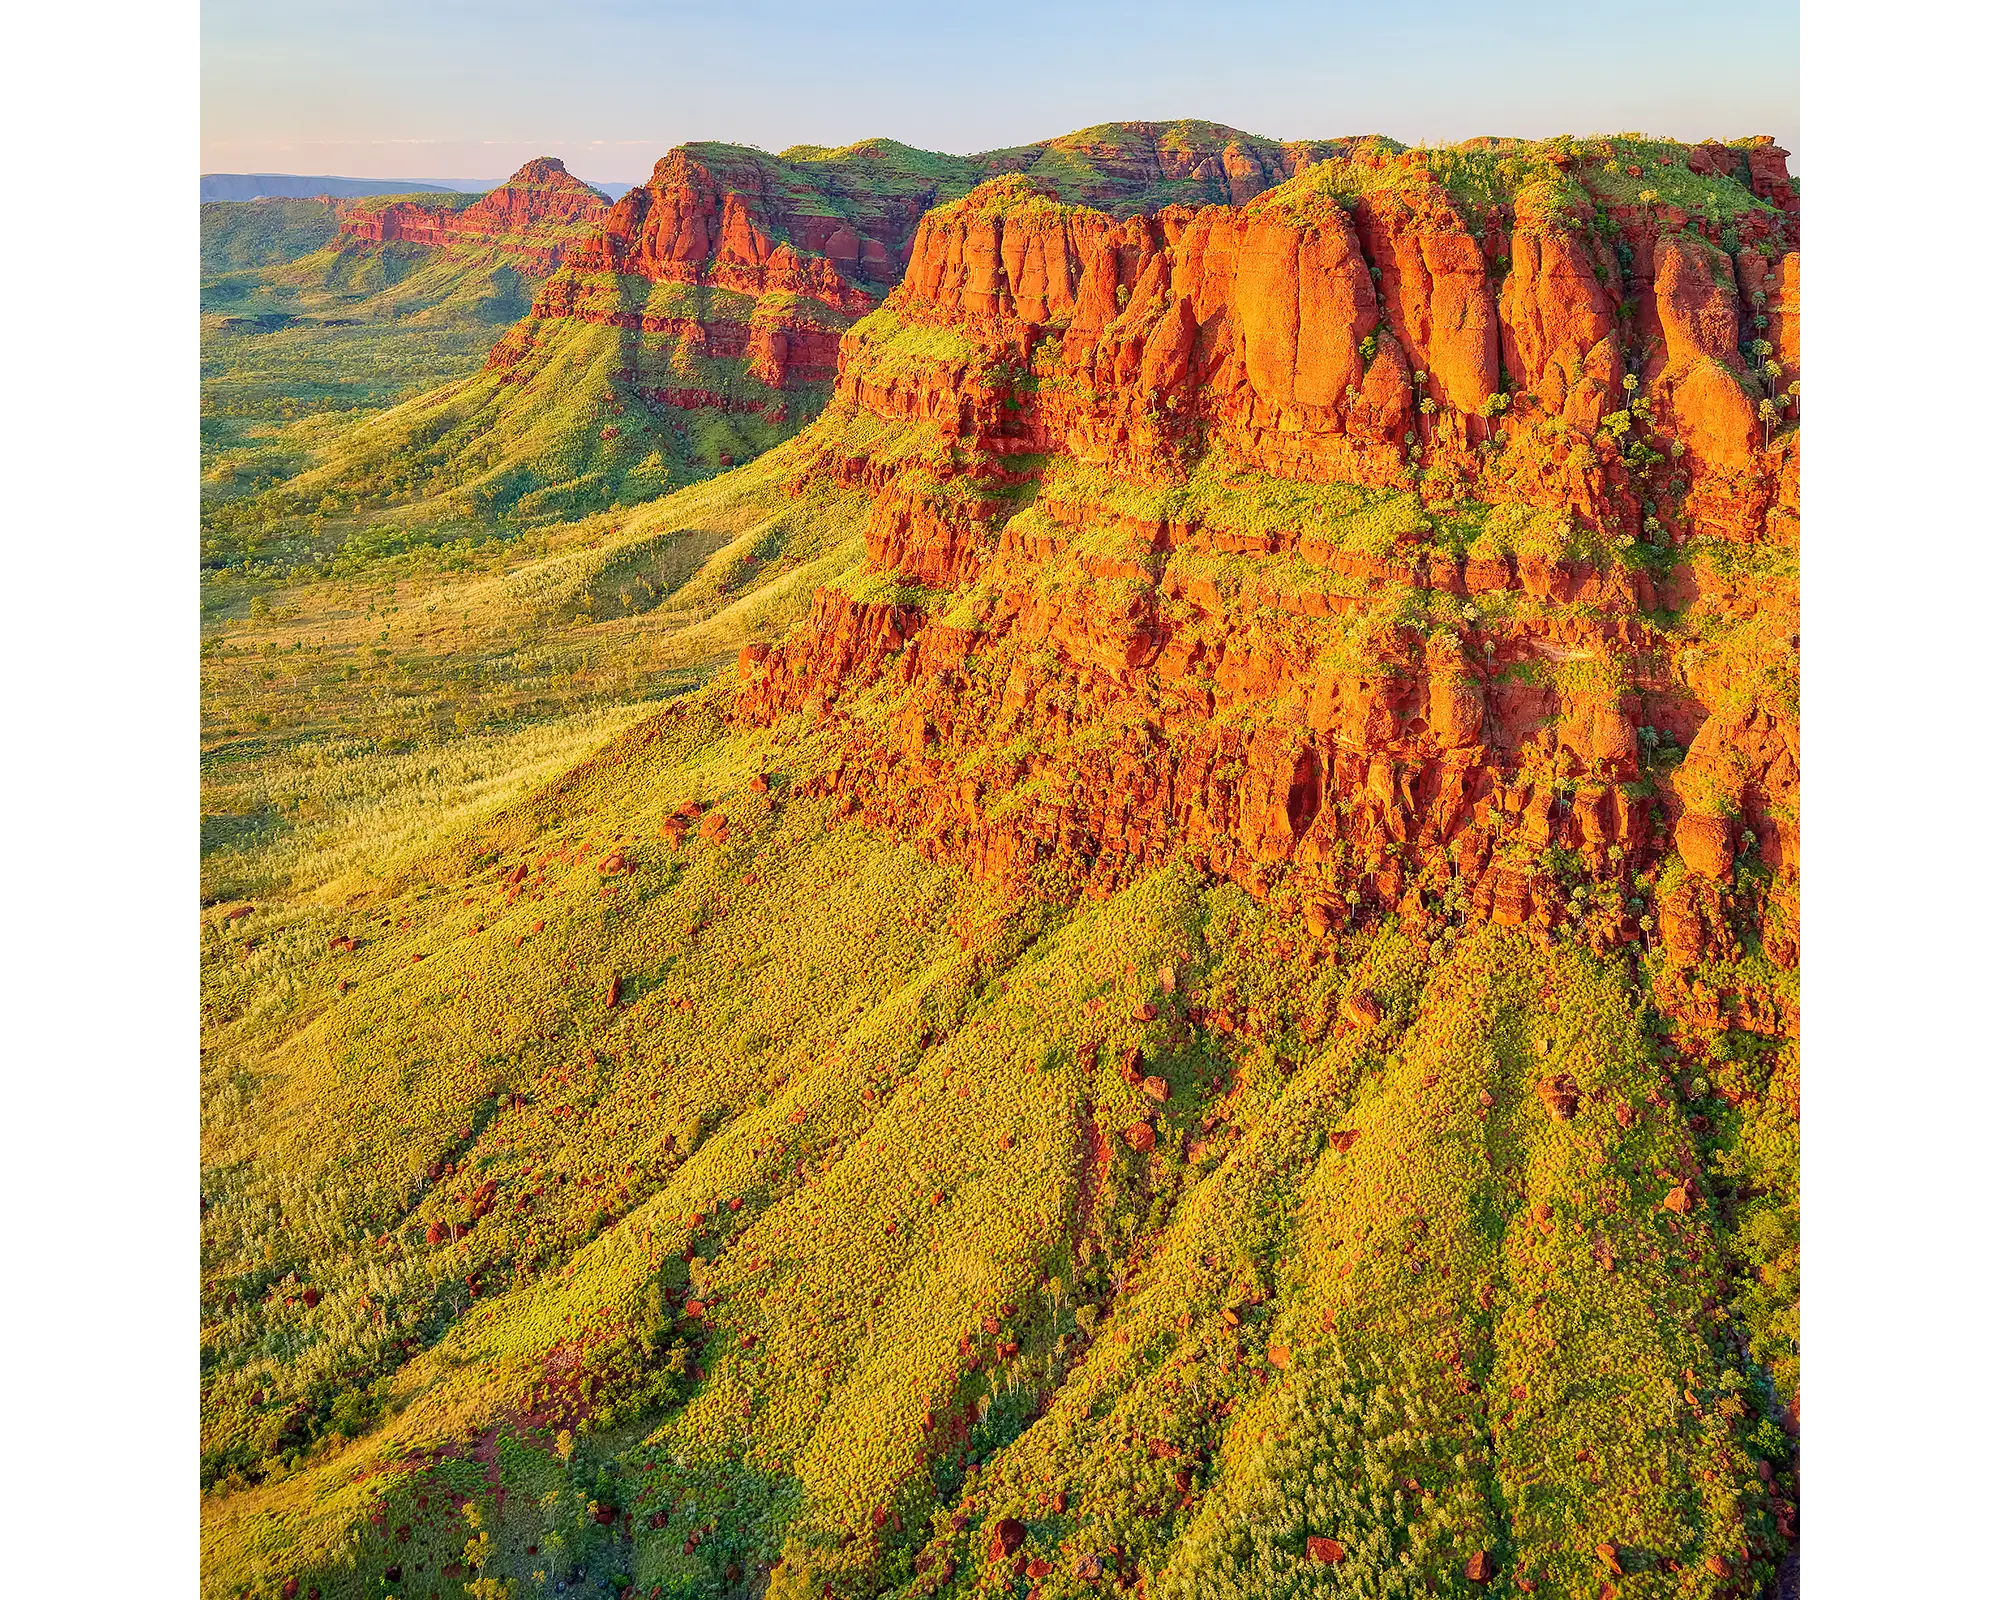 Ragged Bluff - Ragged Range, The Kimberley, Western Australia.